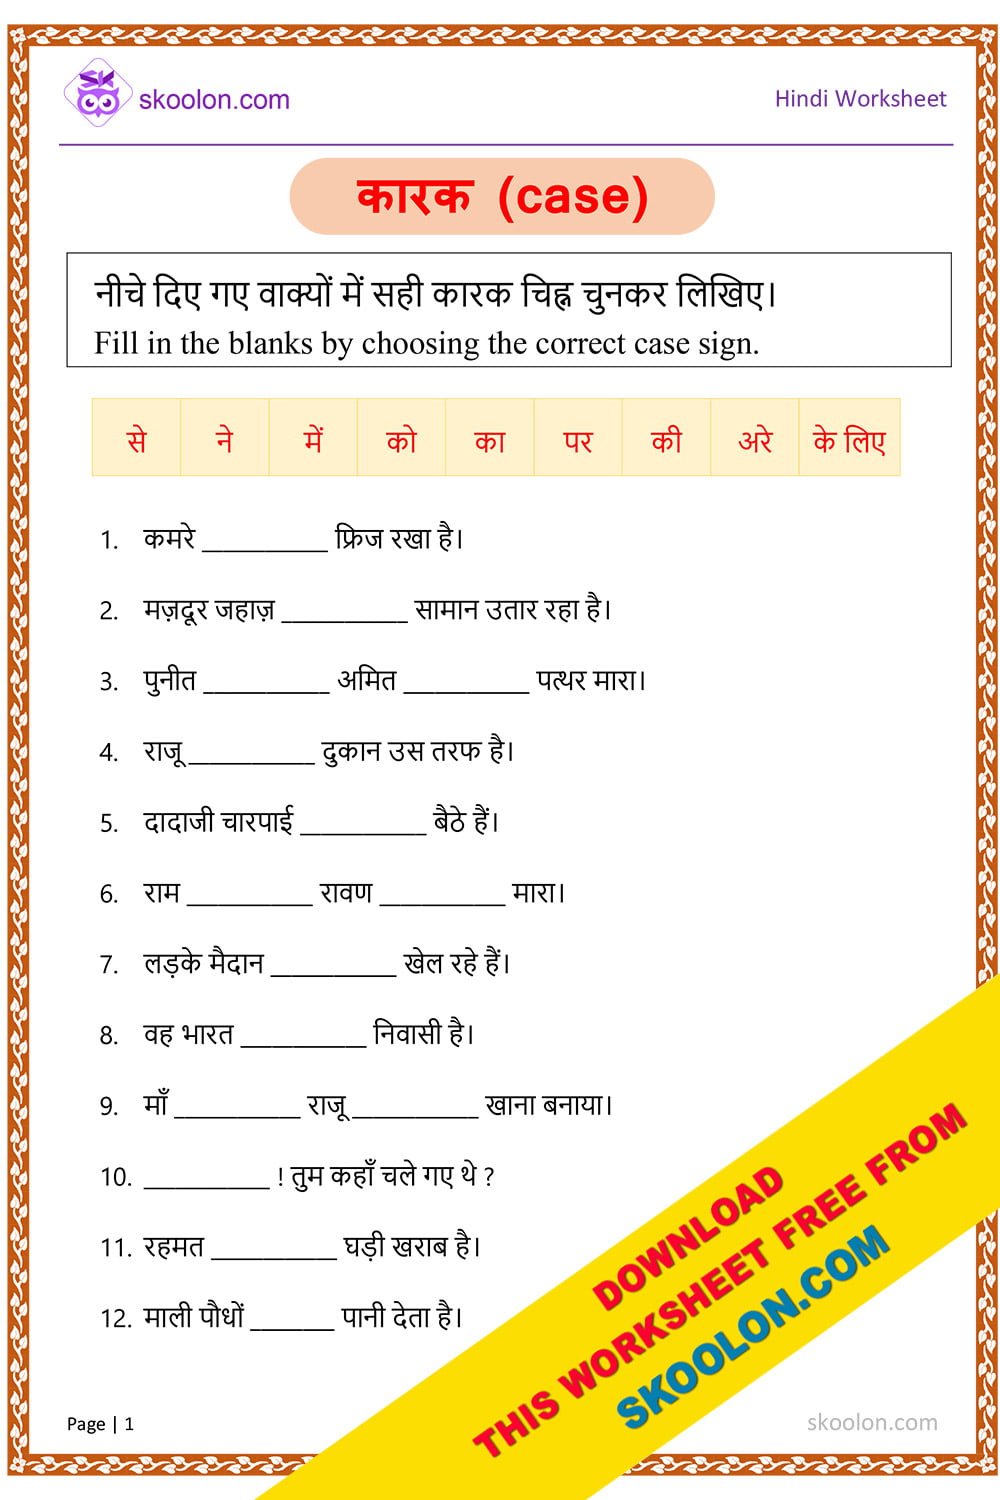 Karak Hindi Grammar Worksheet-6 - skoolon.com